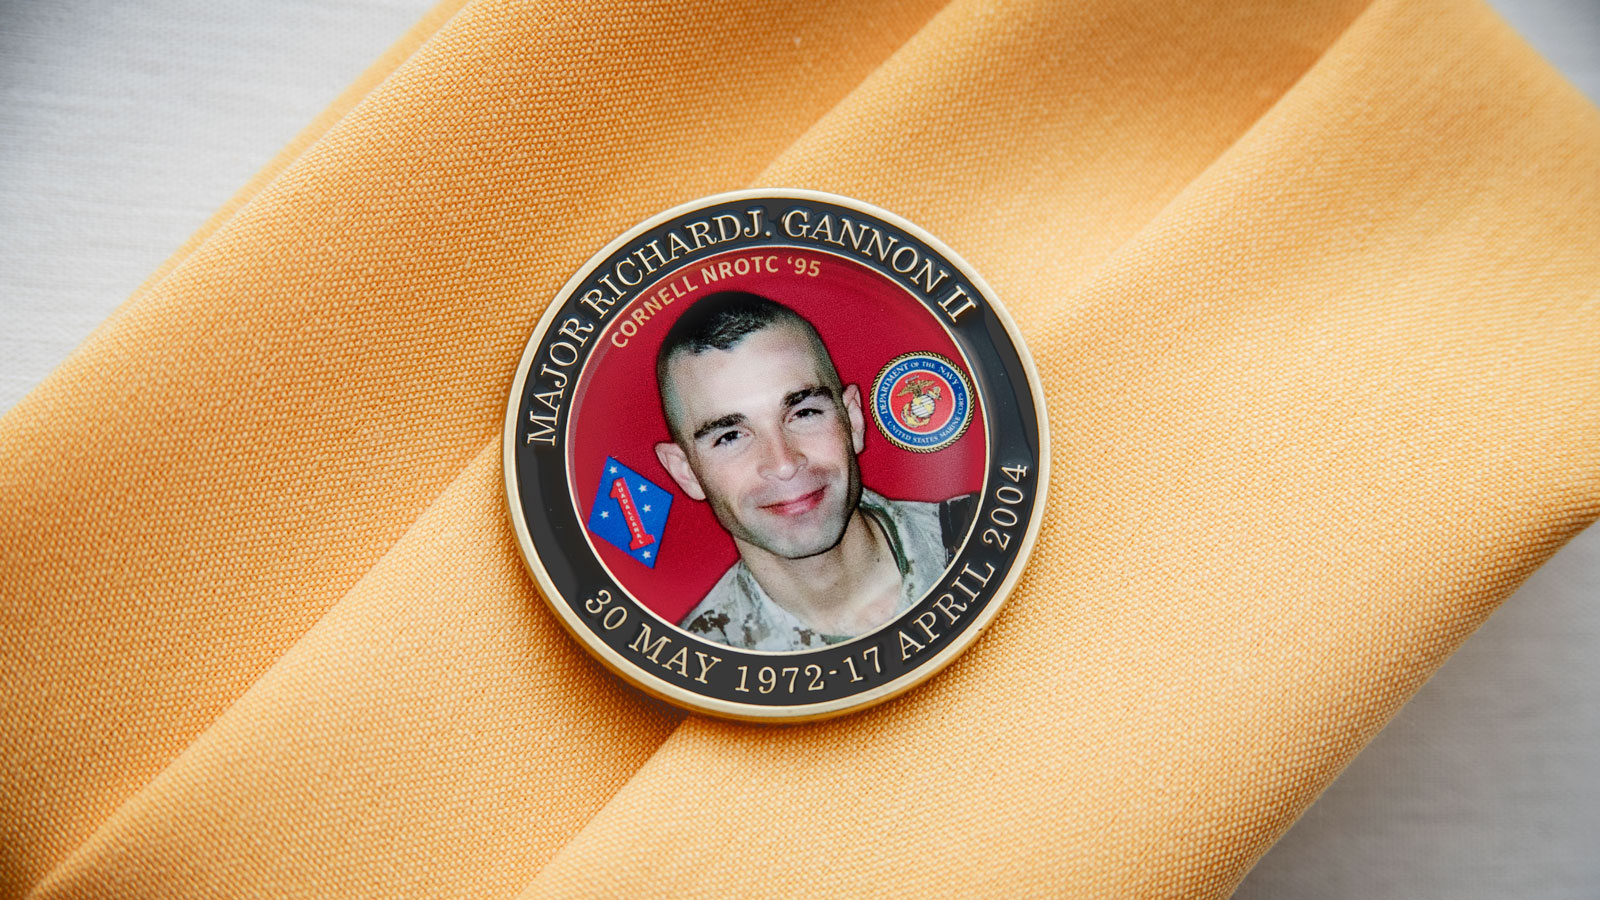 A memorial coin with a photo of Rick Gannon